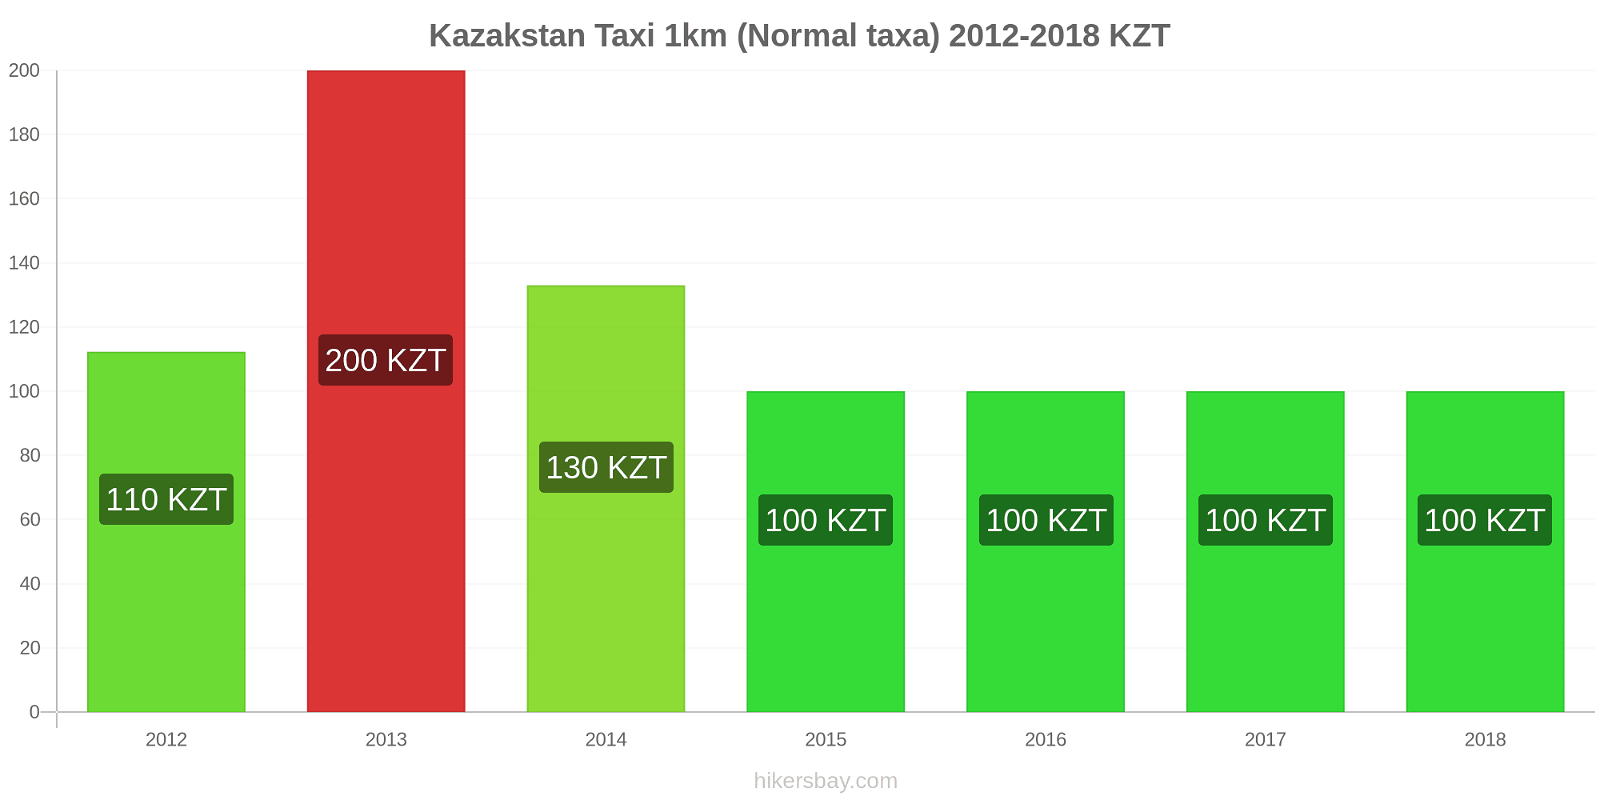 Kazakstan prisändringar Taxi 1km (Normal taxa) hikersbay.com